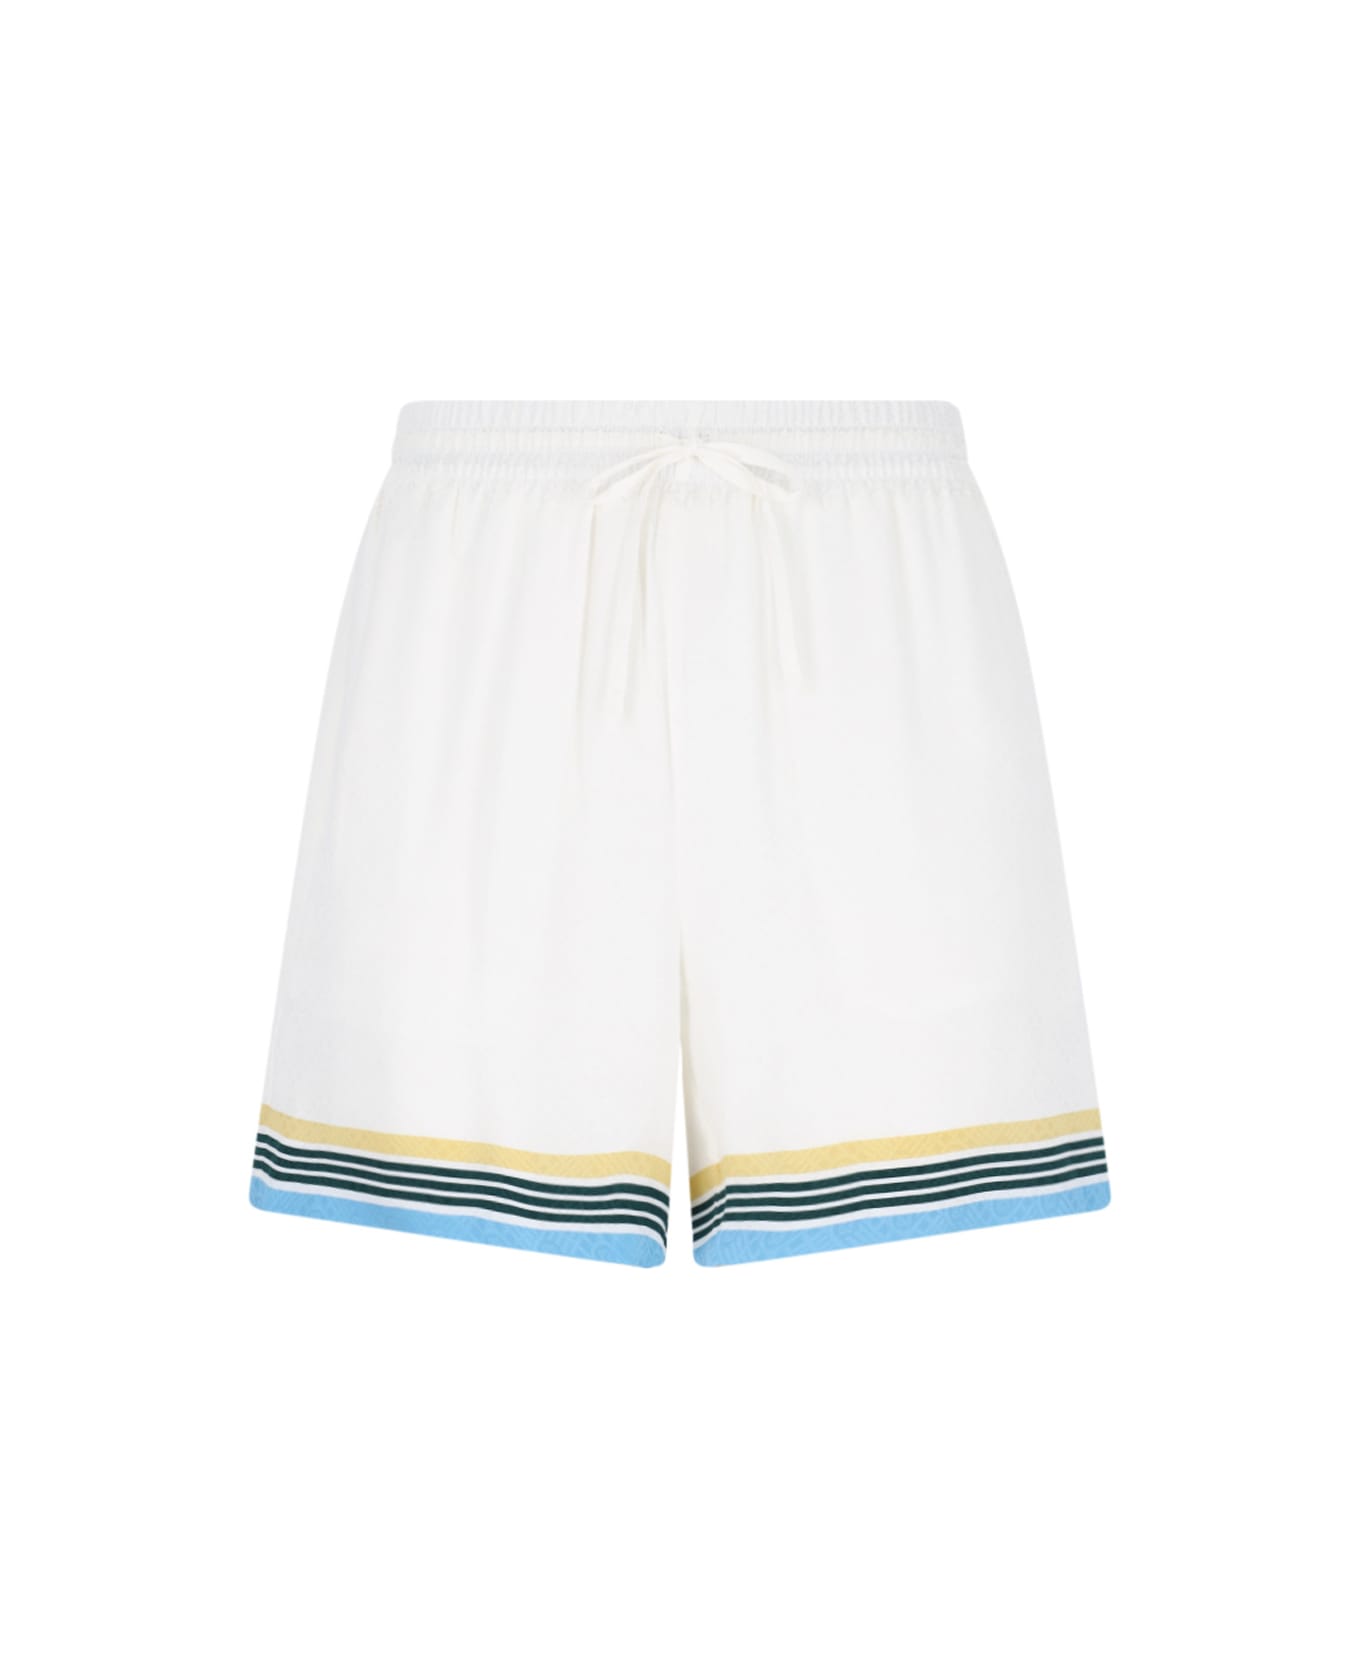 Casablanca 'casa Way' Shorts - White ショートパンツ